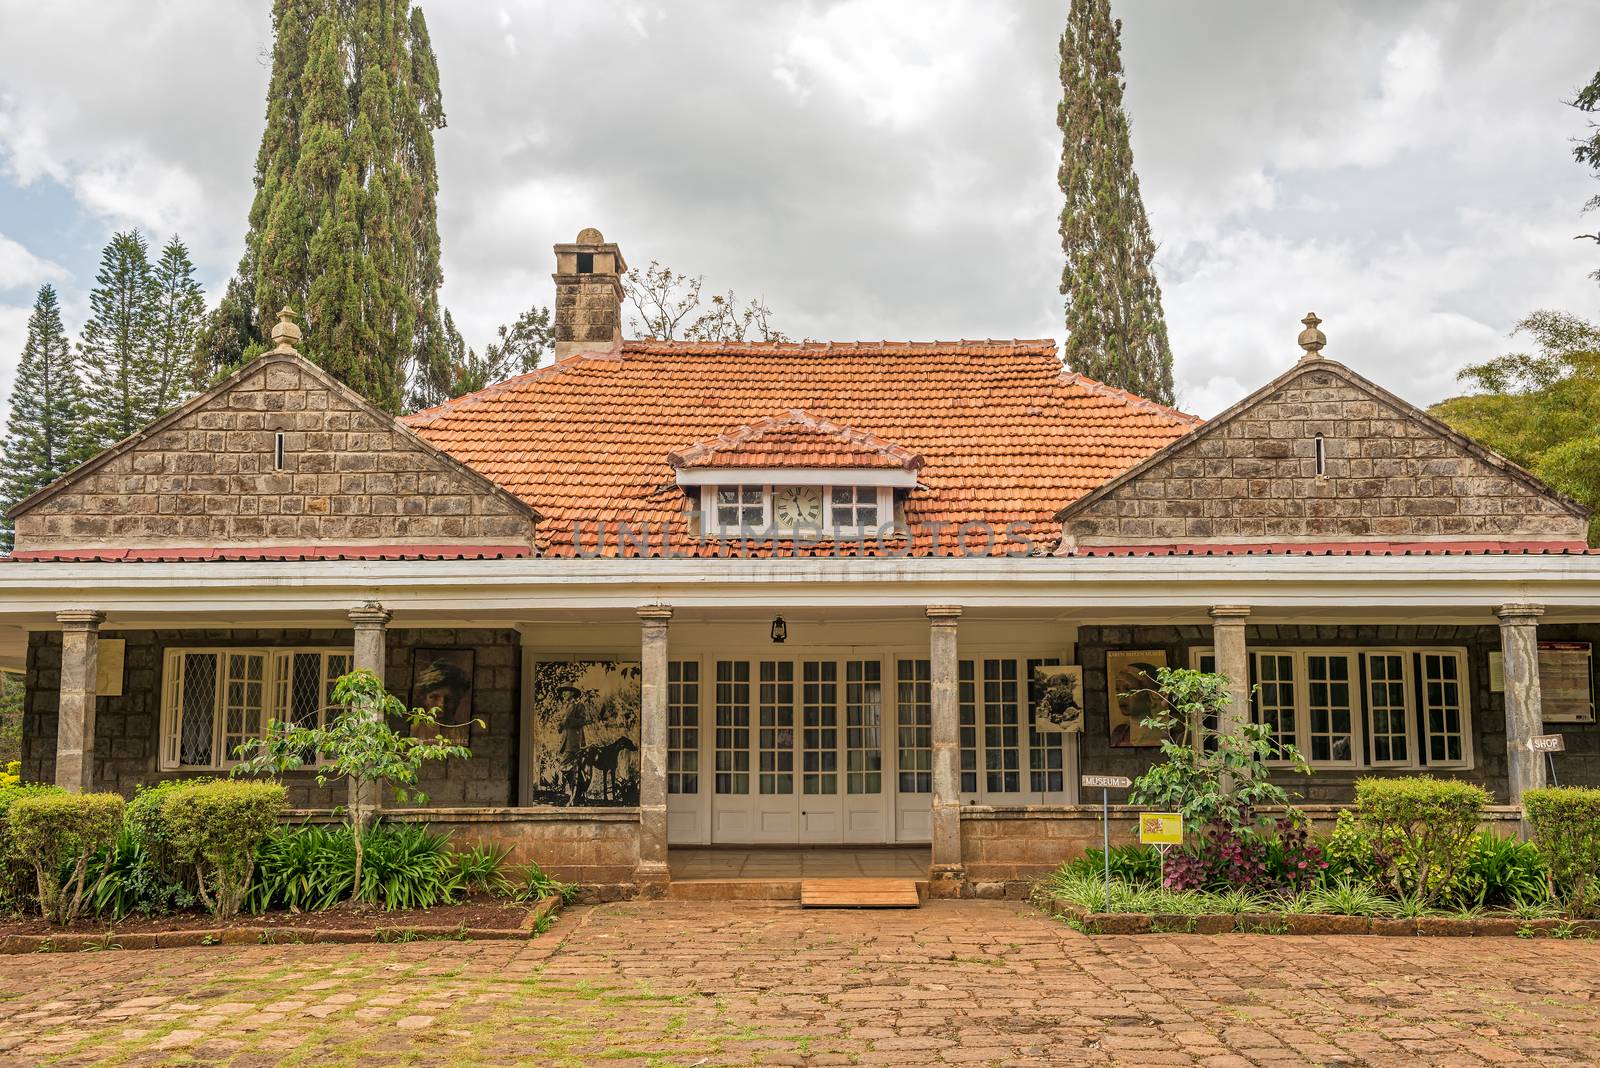 Museum of Karen Blixen in Nairobi, Kenya by nickfox